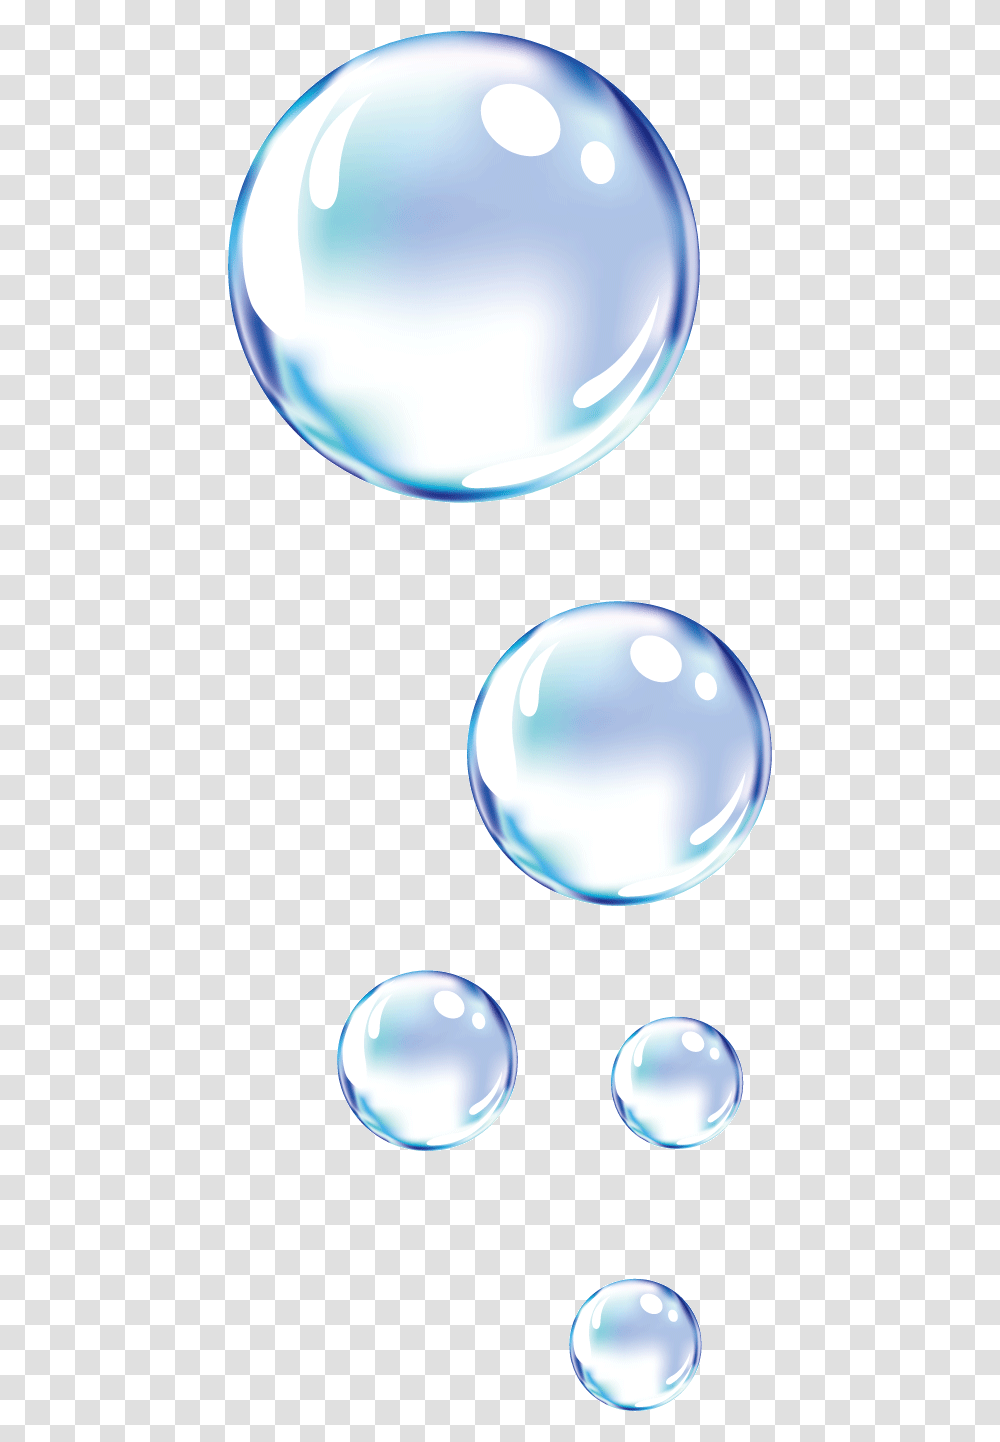 Water Bubble Vector Dynamic Droplets Free Bubbles, Sphere Transparent Png